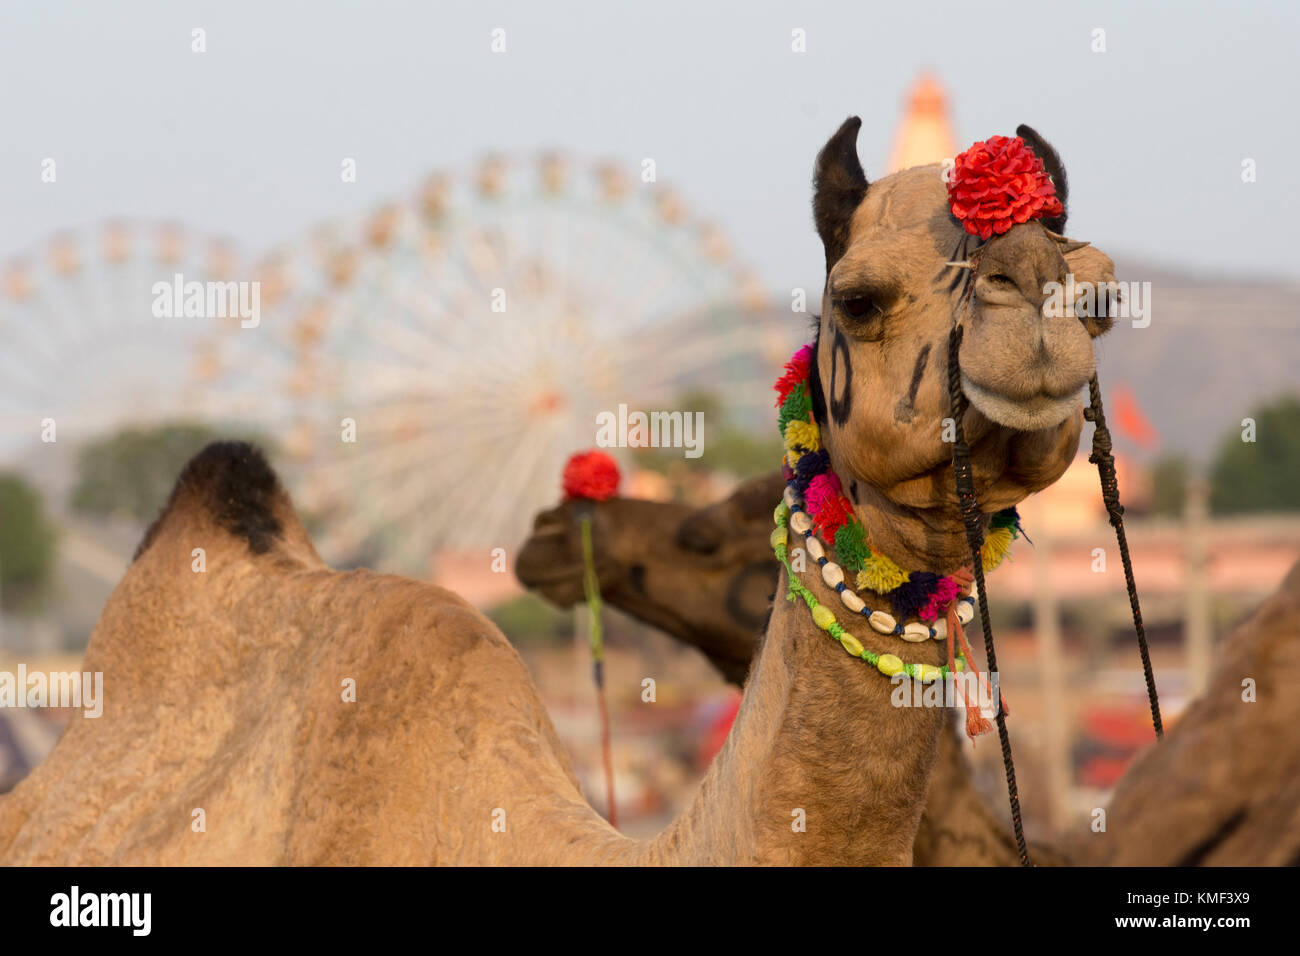 Medium close up of a decorated camel at the Pushkar Camel Festival, Pushkar, Rajasthan, India. Stock Photo